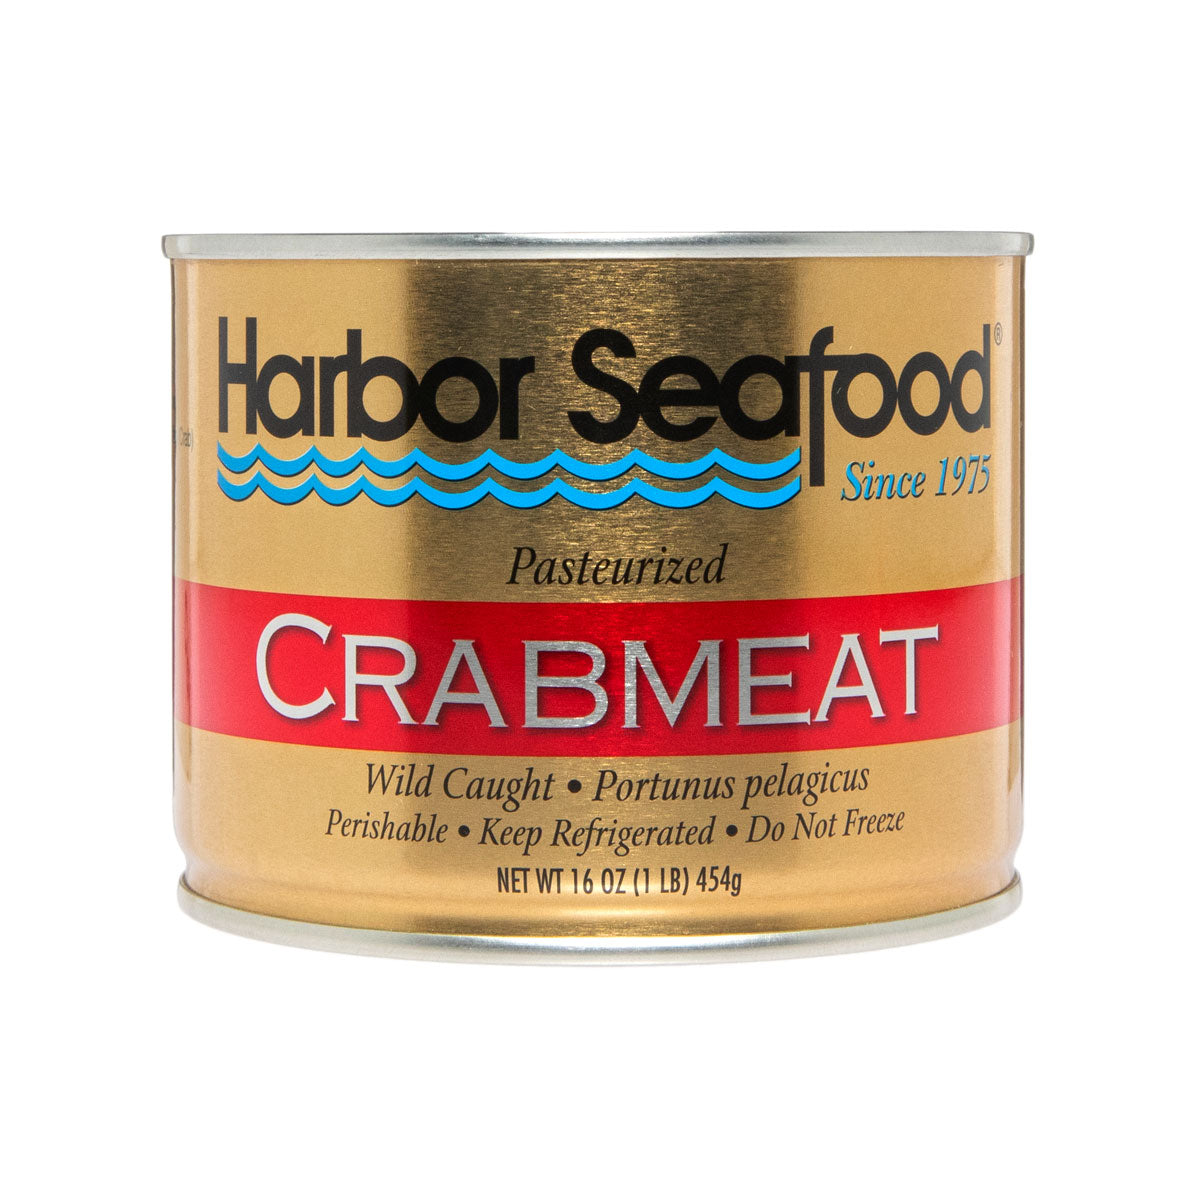 Harbor Seafood Super Lump Crab Meat